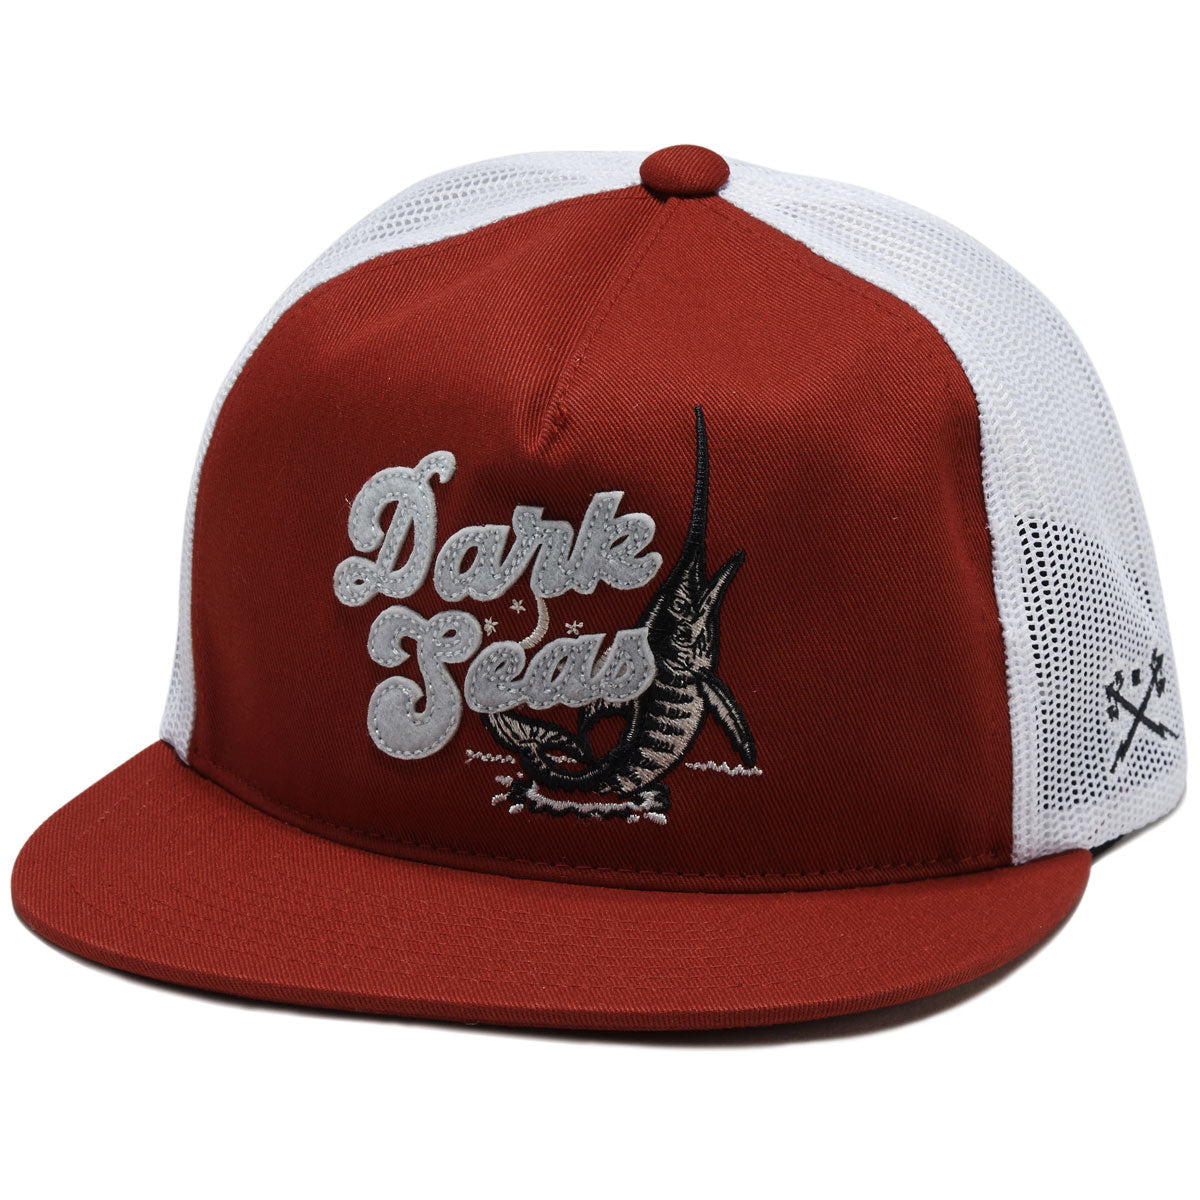 Dark Seas Billfish Hat - Red/White image 1